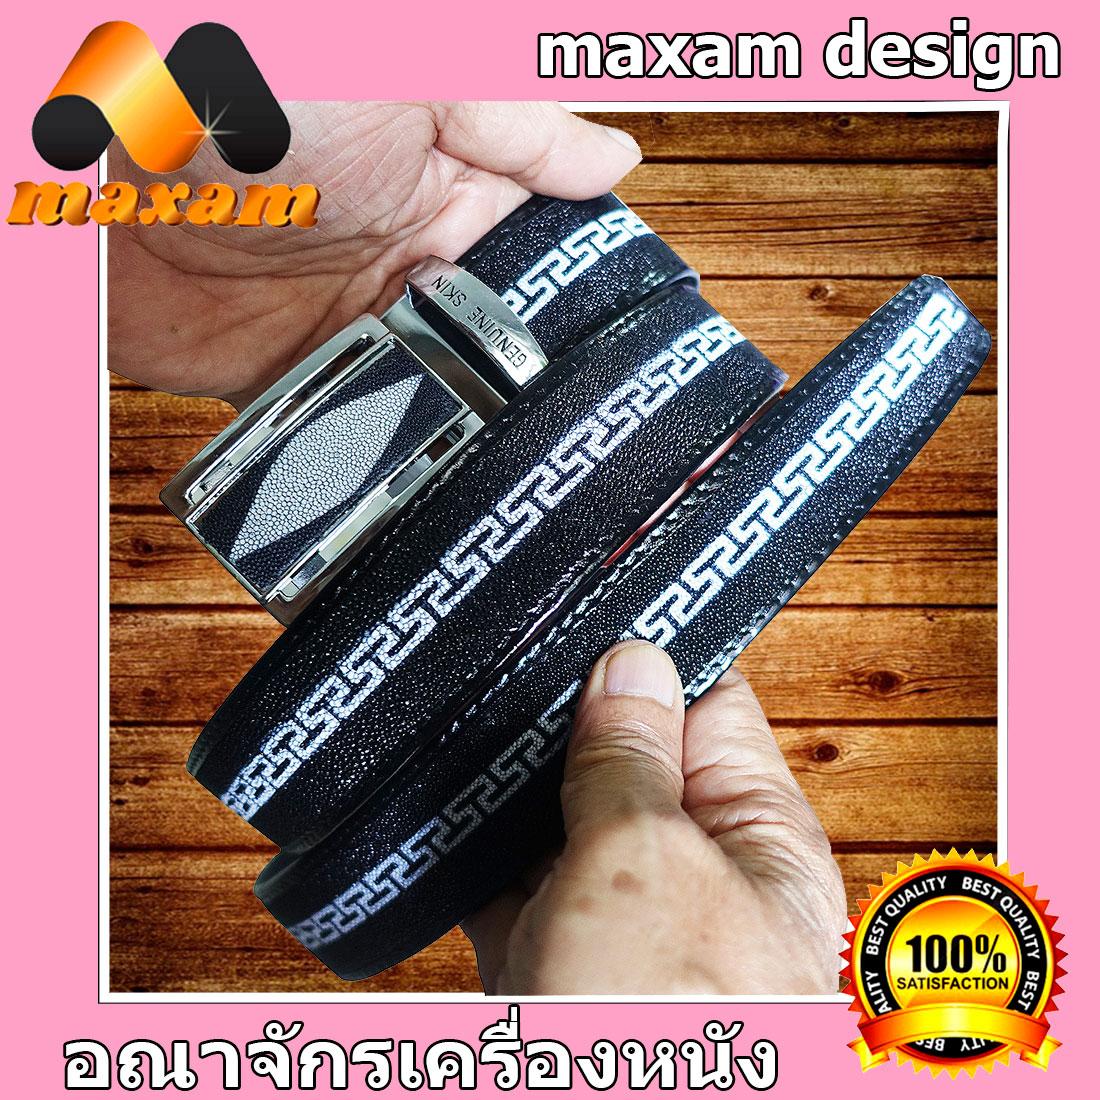 maxam design  เข็มขัดหนังแท้ จากธรรมชาติ Buckle and Belt made from Genuine Stingray ทำจากหนังปลากระเบนแท้ๆ ด้วยลวดลาย ที่โดดเด่น ไม่เหมือนใคร  หัวเข็มขัดเป็นแบบ Auto lock   maxam design